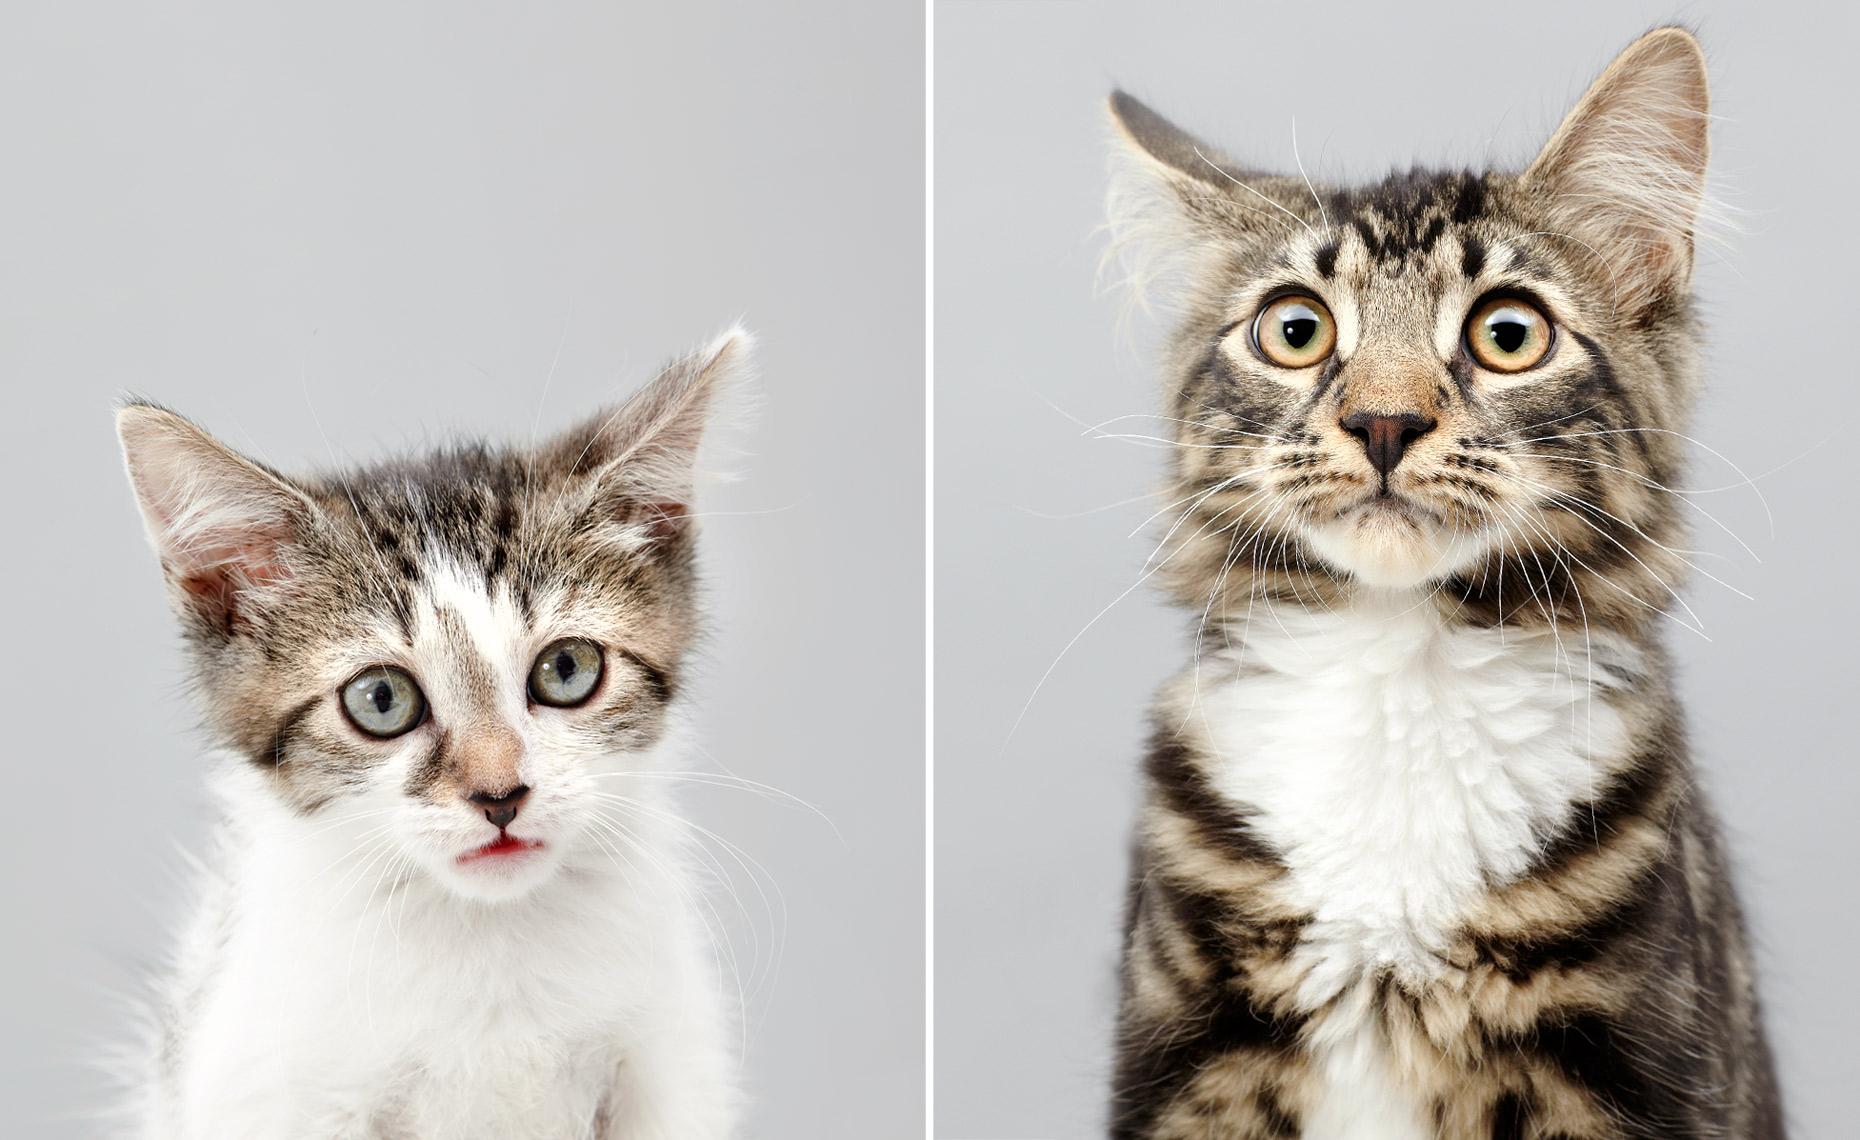 Kitten and cat portrait